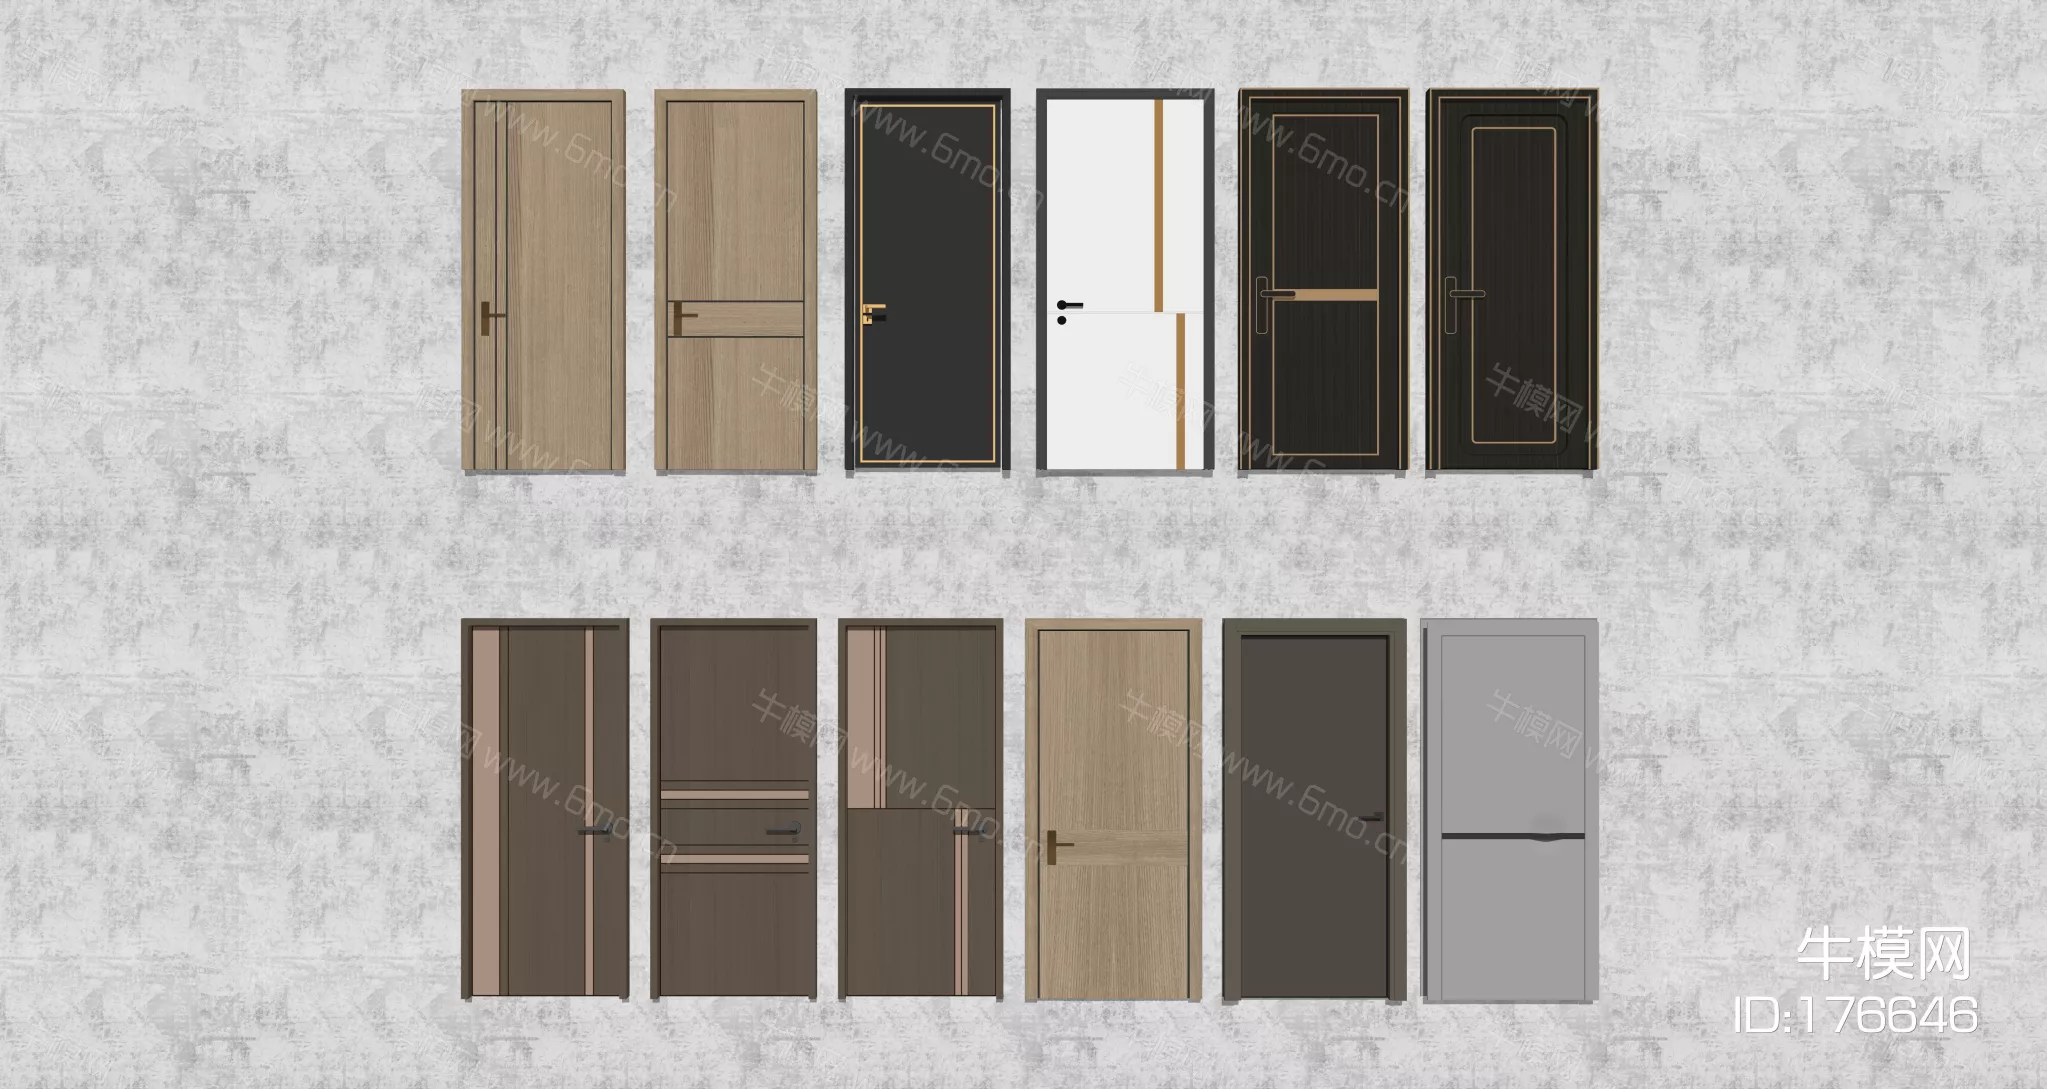 MODERN DOOR AND WINDOWS - SKETCHUP 3D MODEL - ENSCAPE - 176646